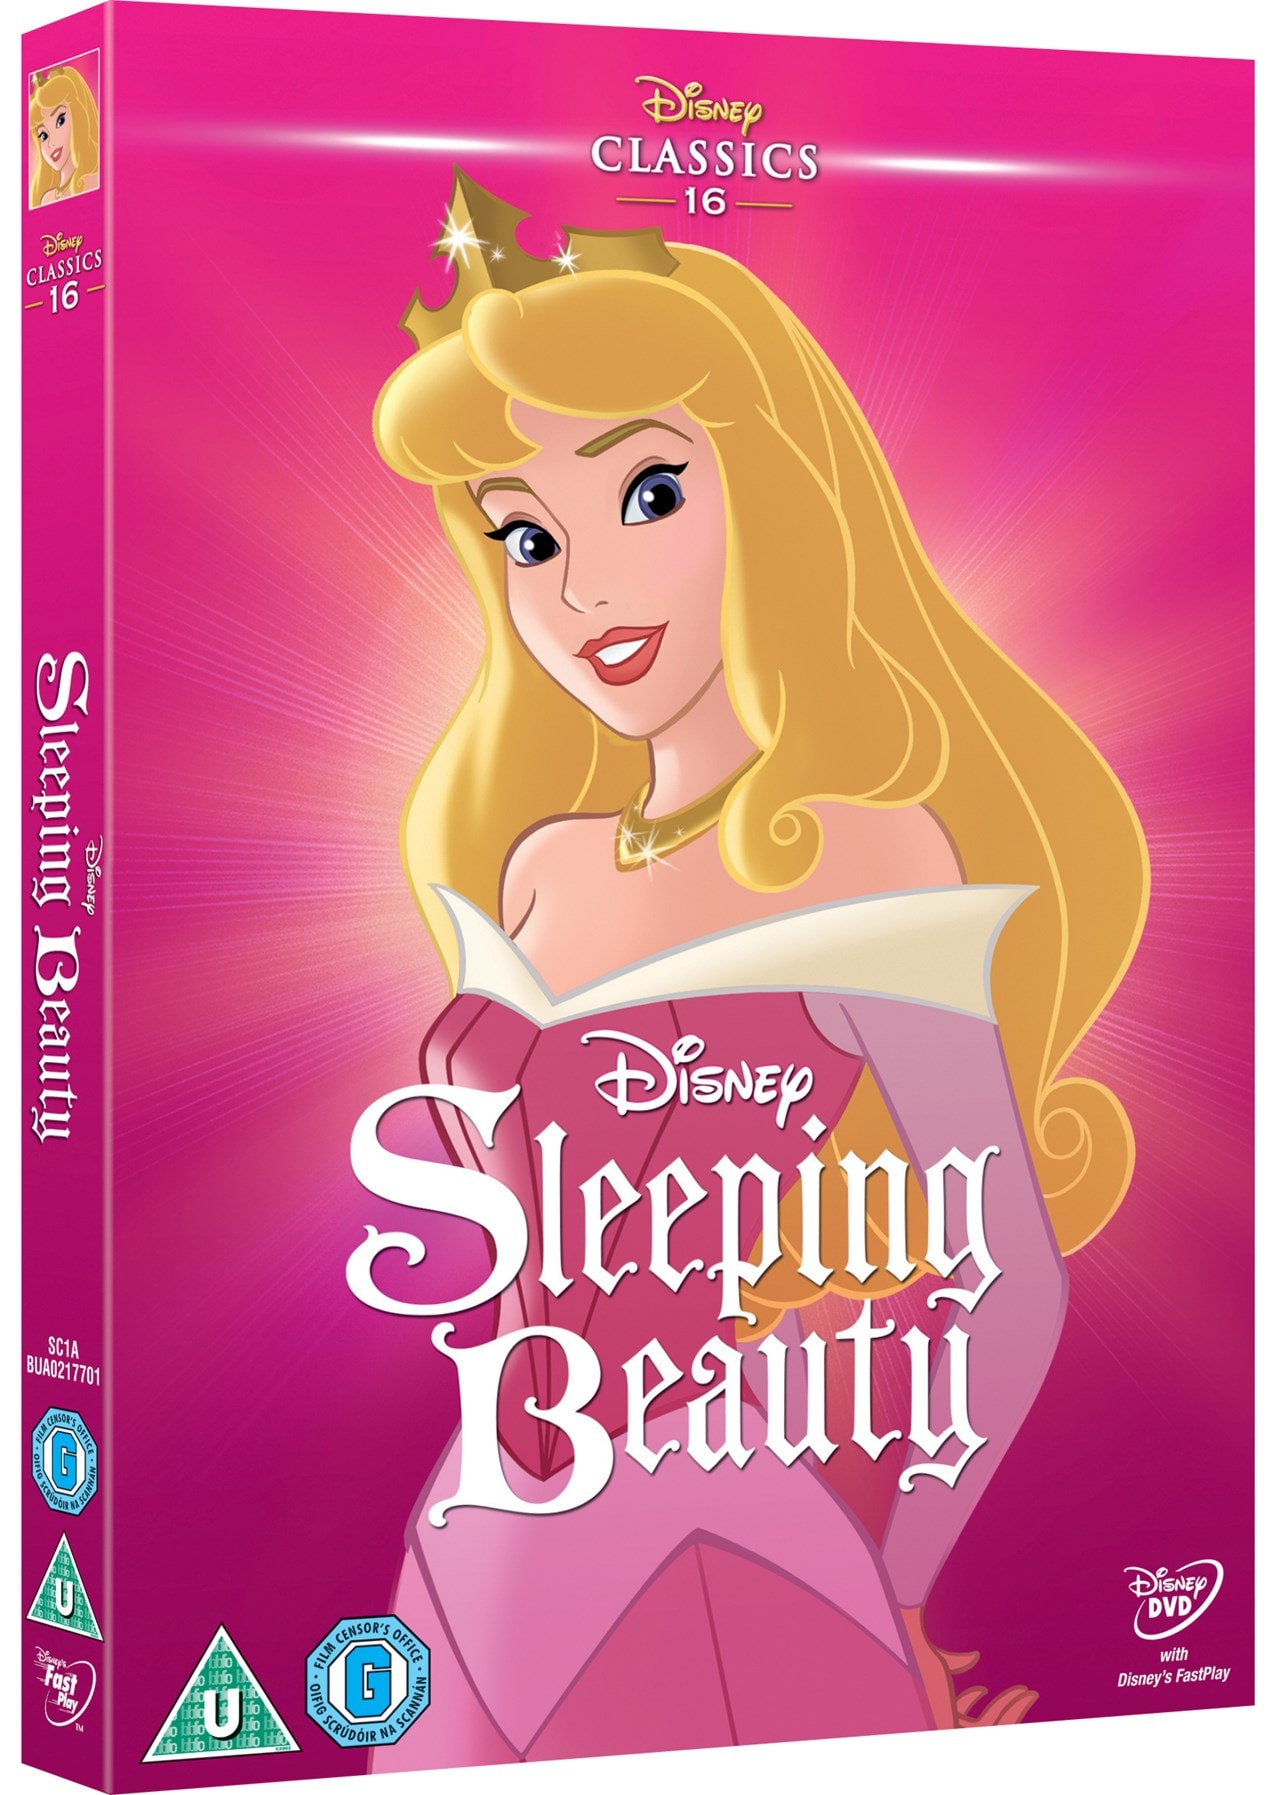 Sleeping Beauty Disney Dvd Free Shipping Over £20 Hmv Store